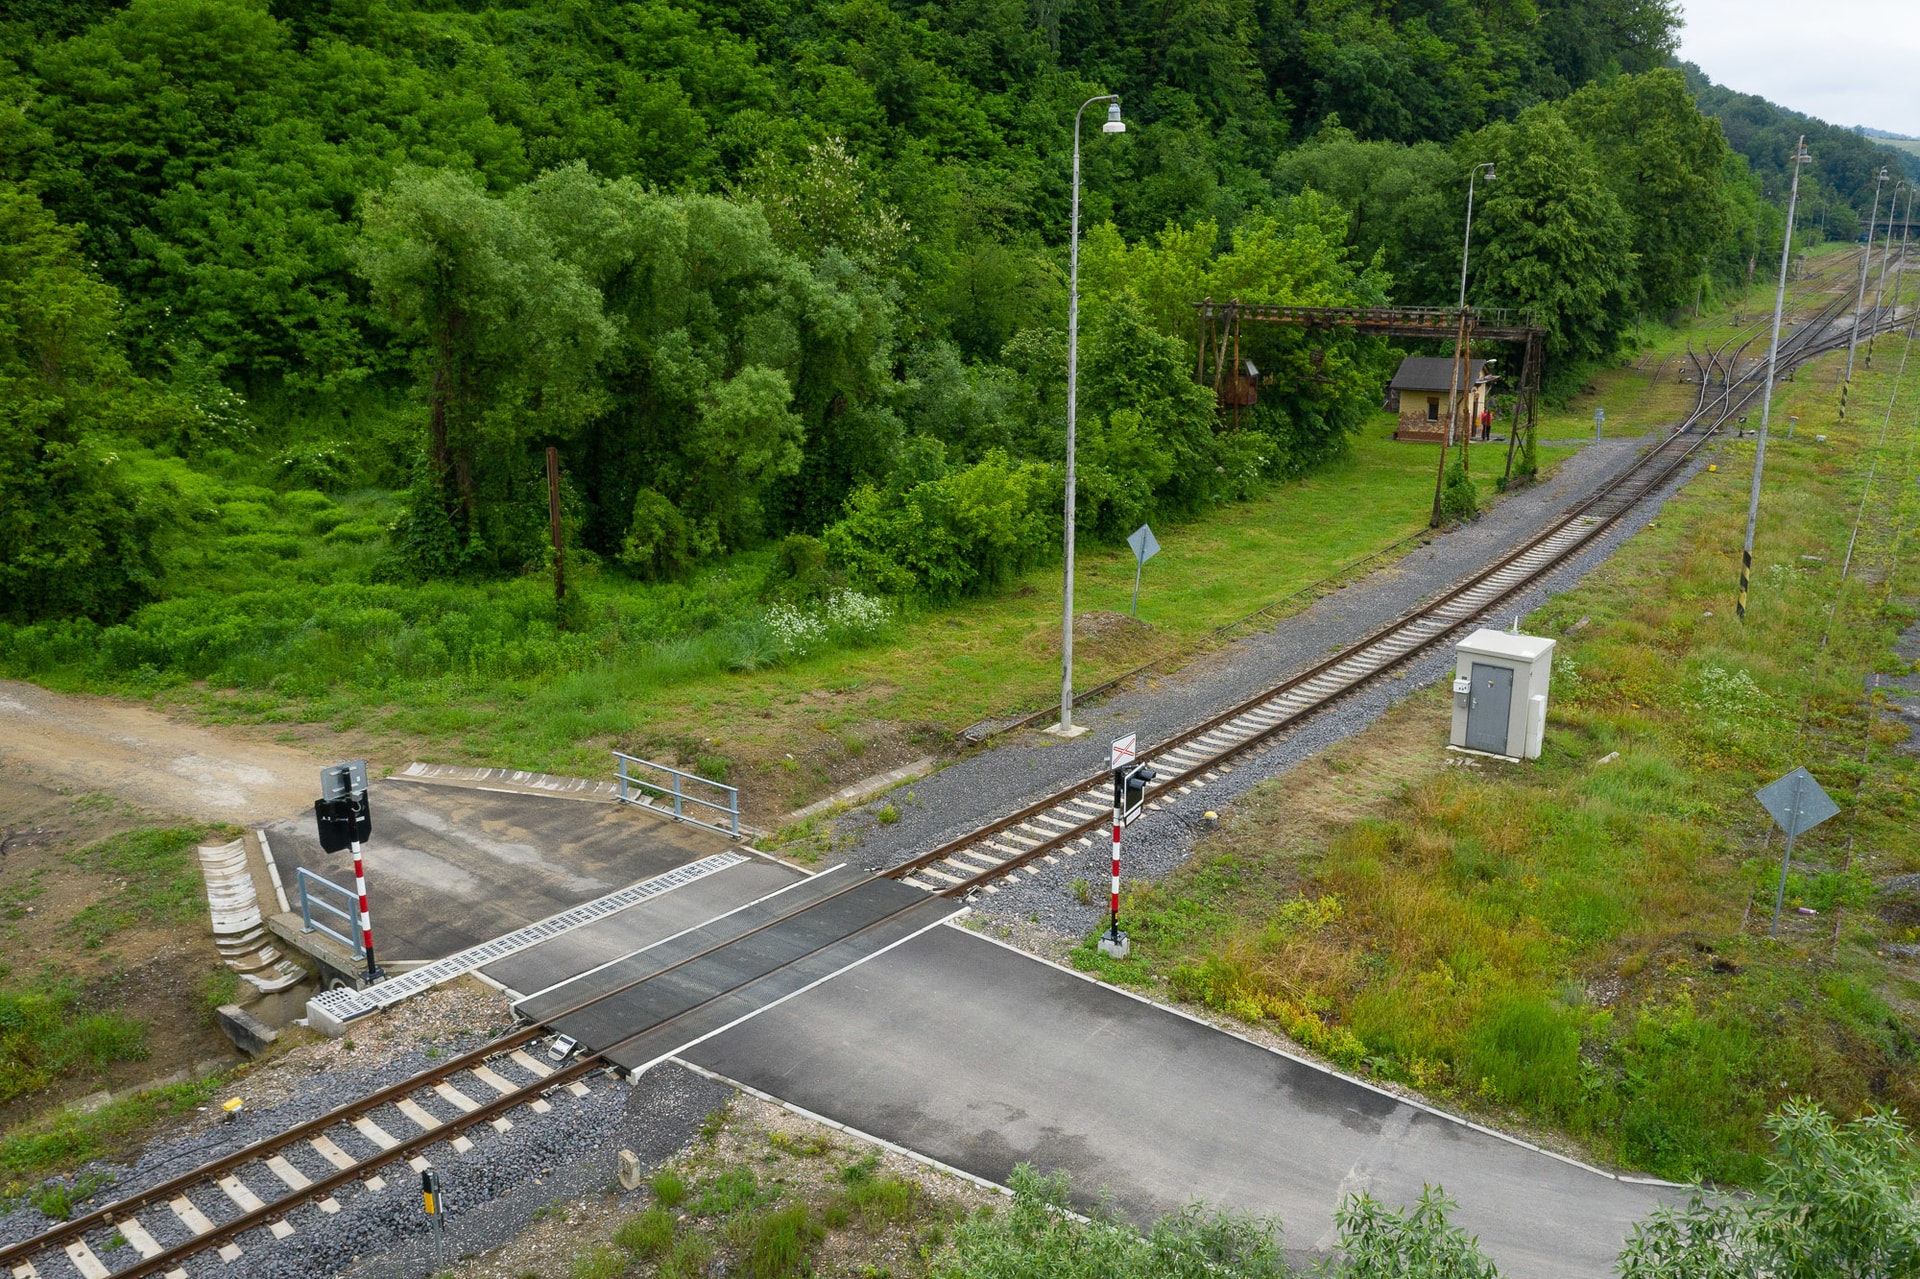 Scheidt & Bachmann level crossings systems